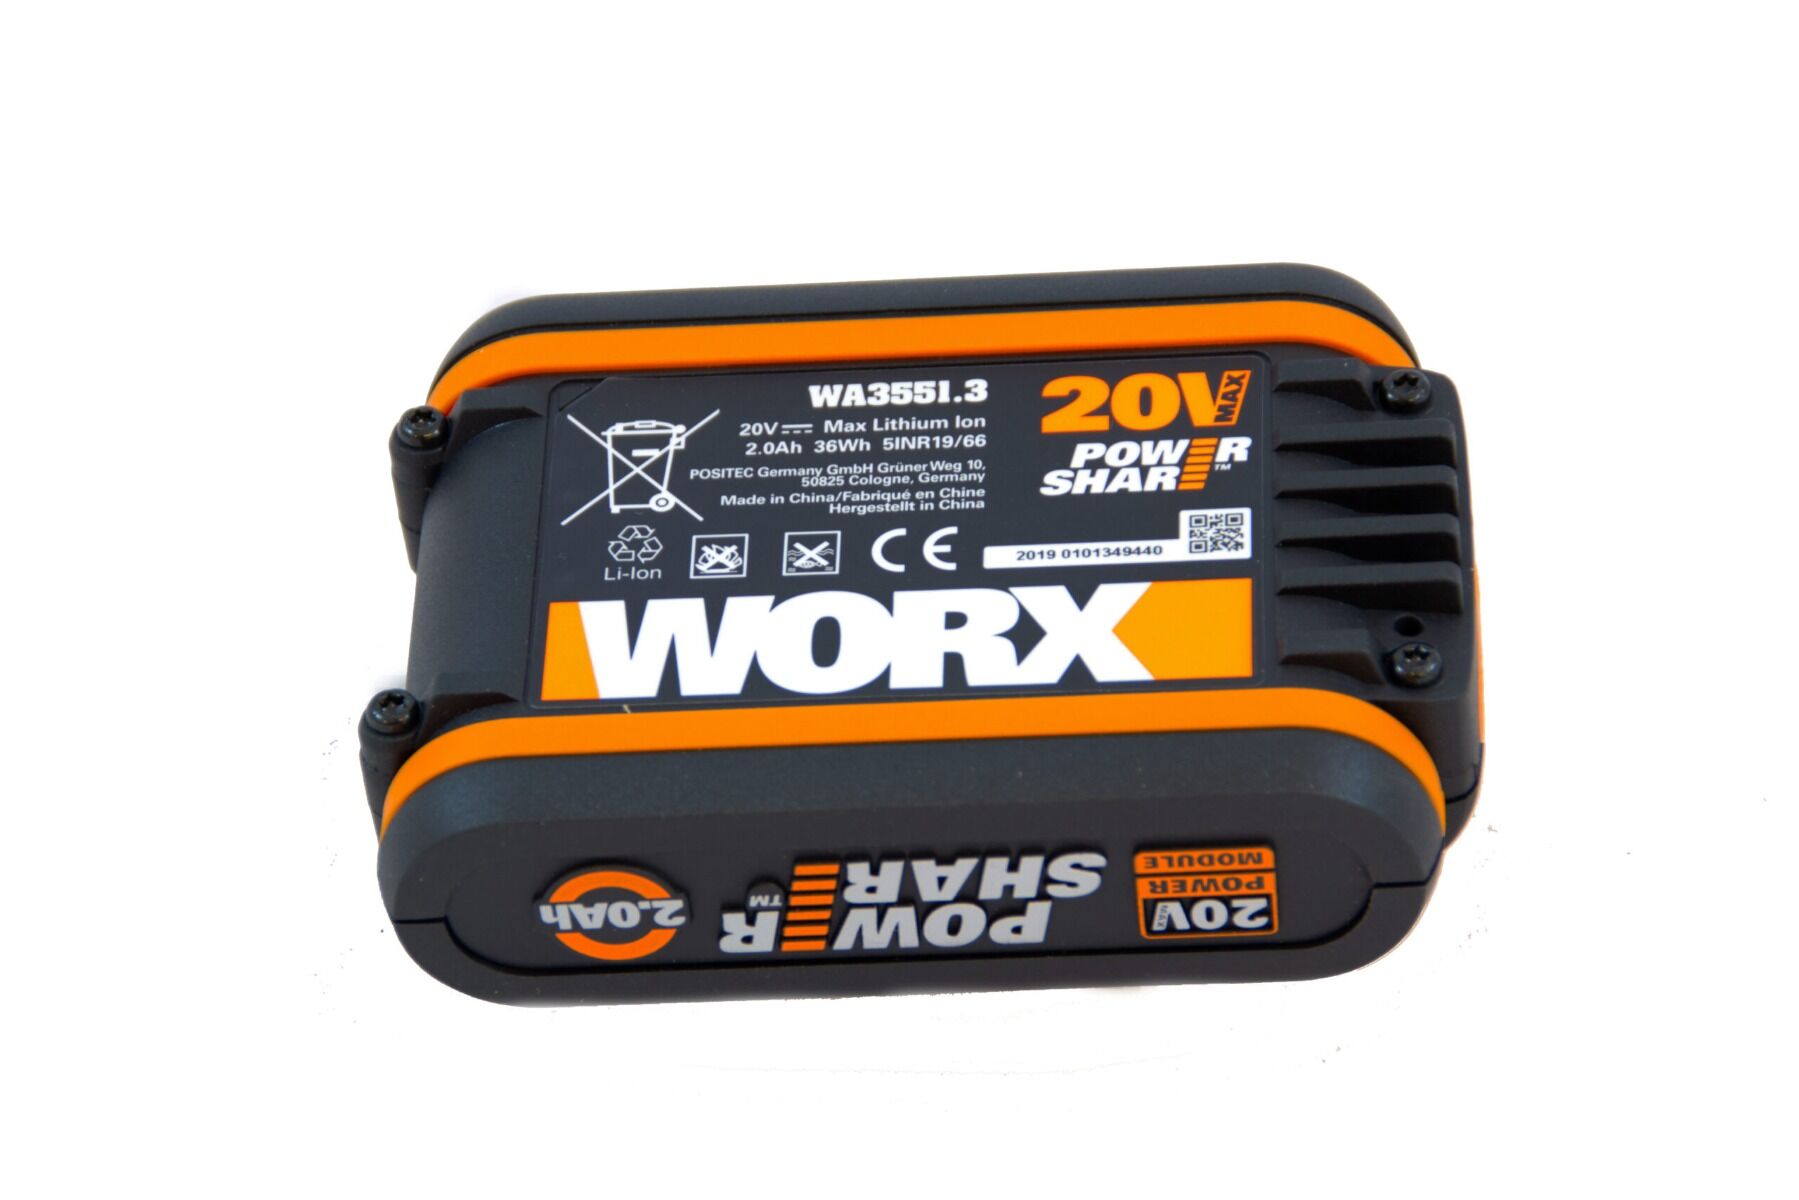 Worx Landroid Worx accu 2.0AH, 20V - WA3551.3